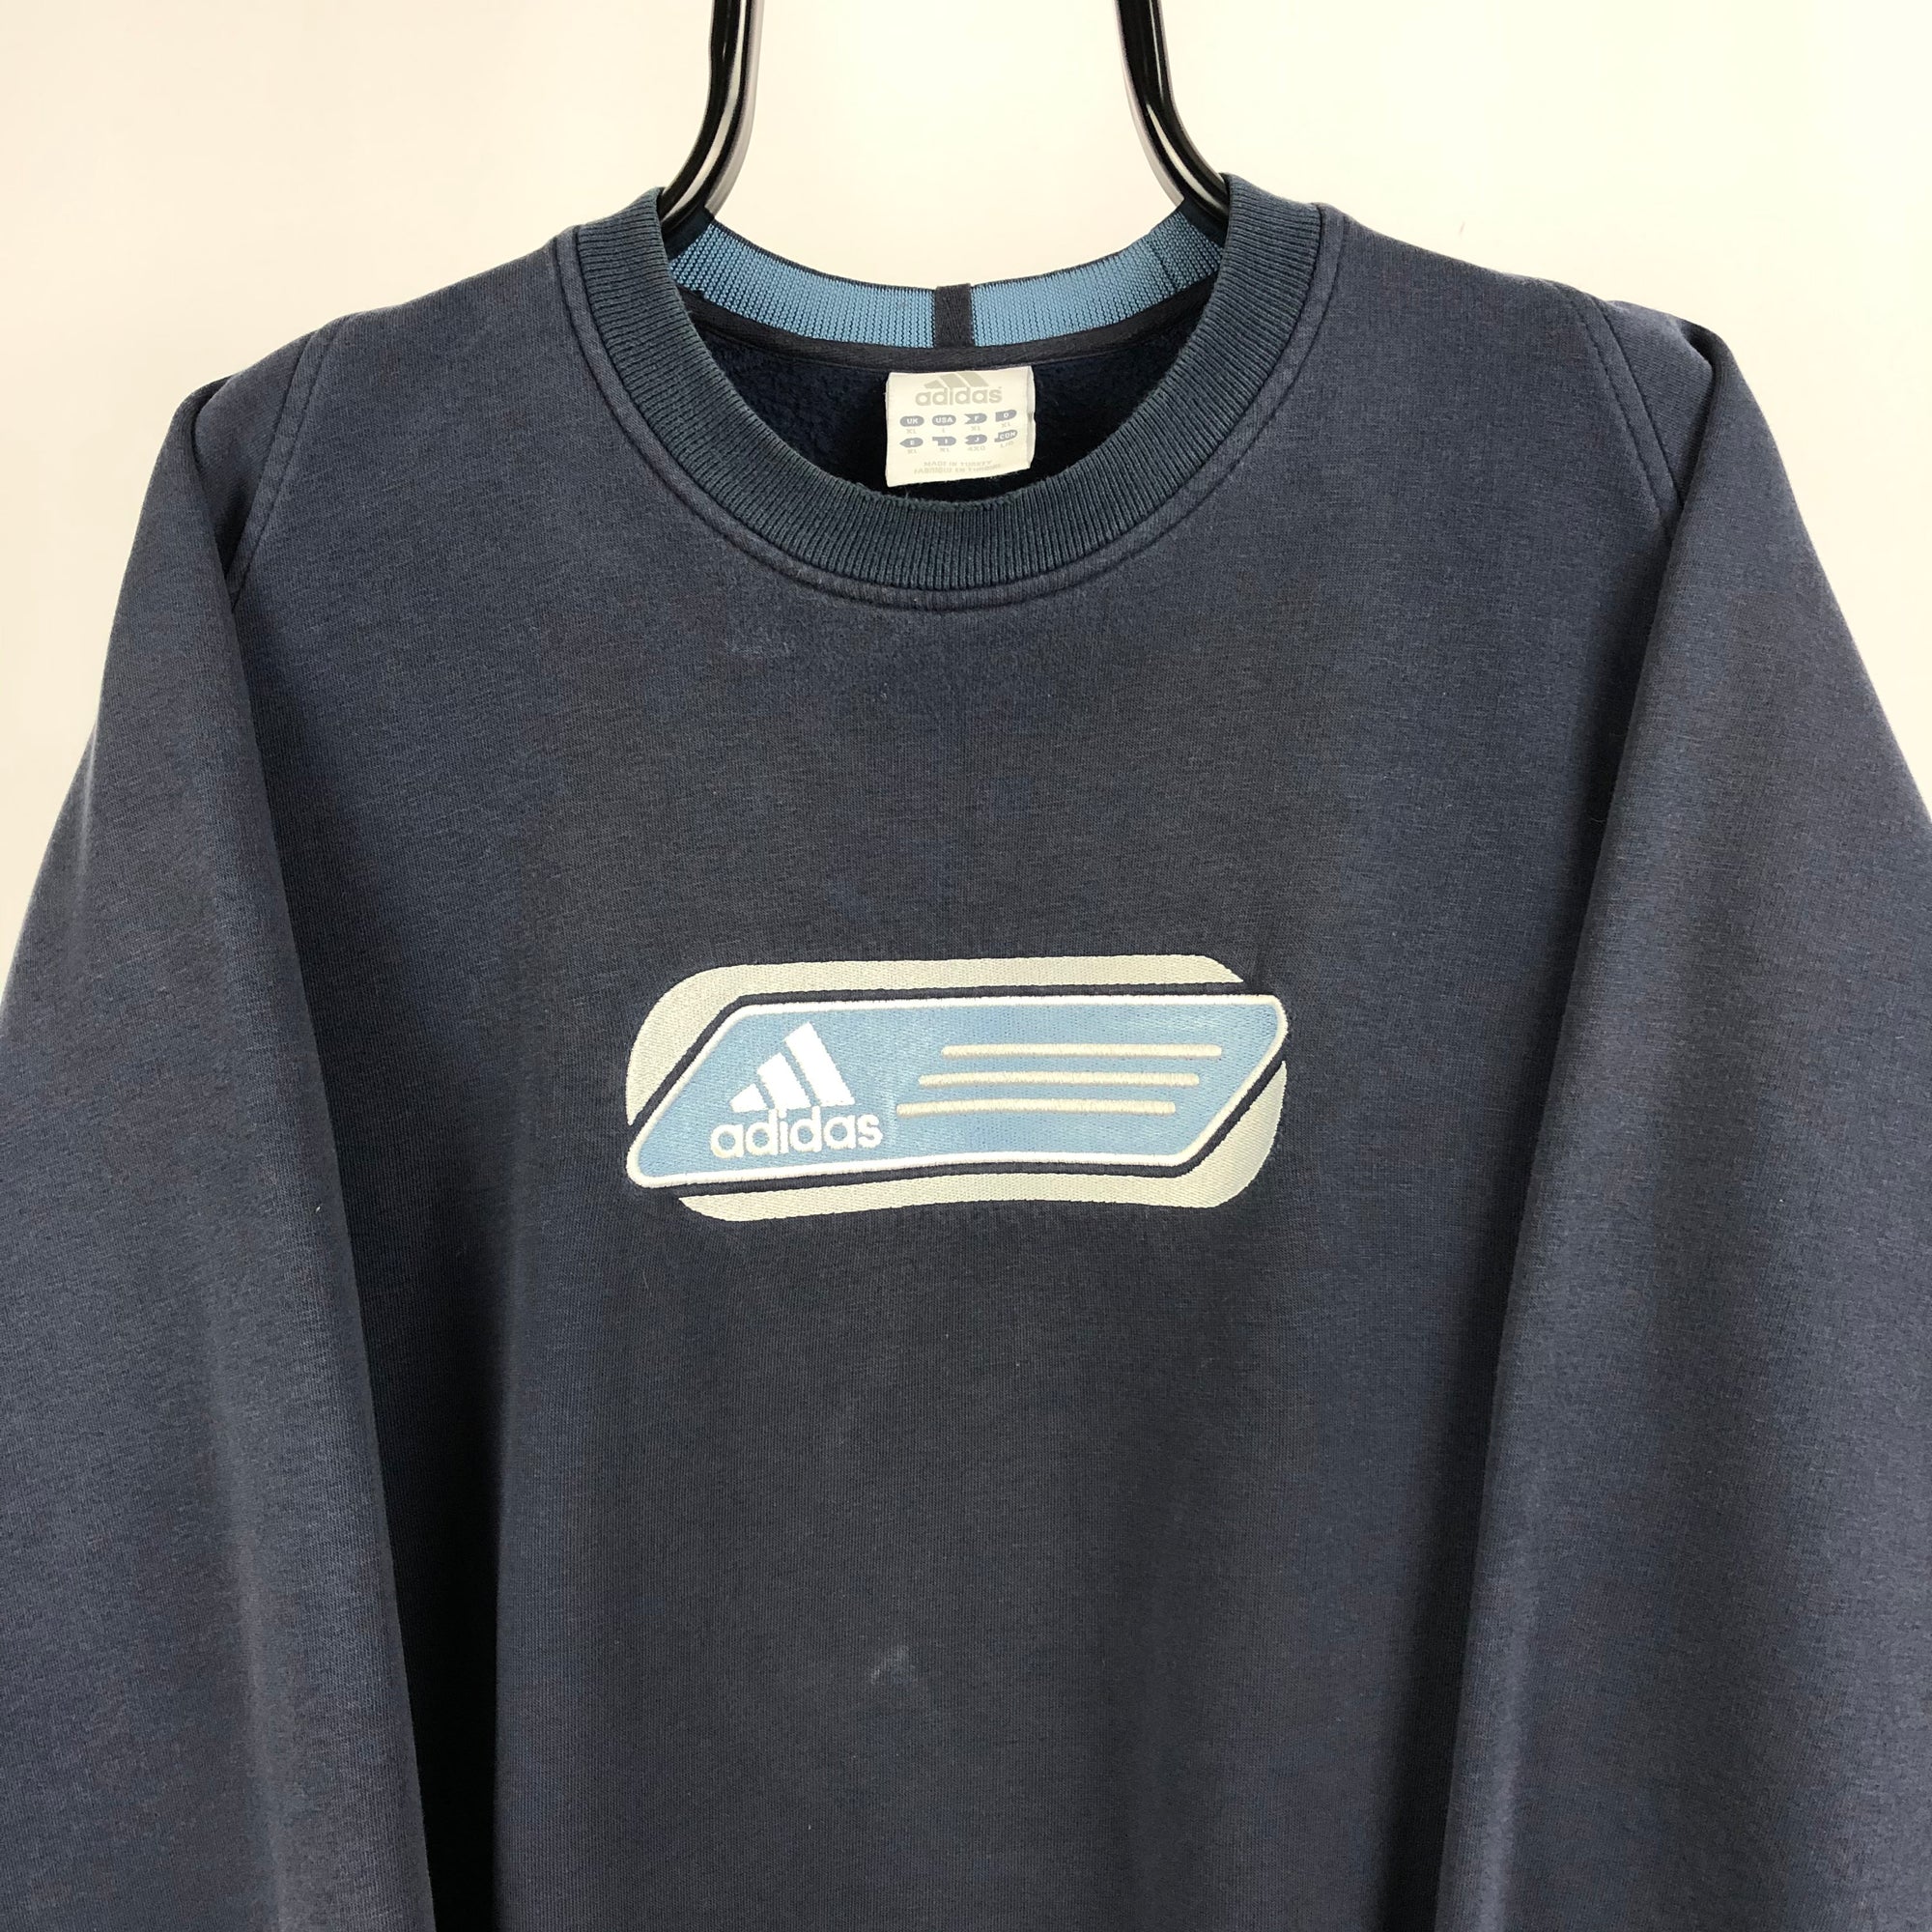 Vintage Adidas Spellout Sweatshirt in Navy/Baby Blue - Men's Large/Women's XL